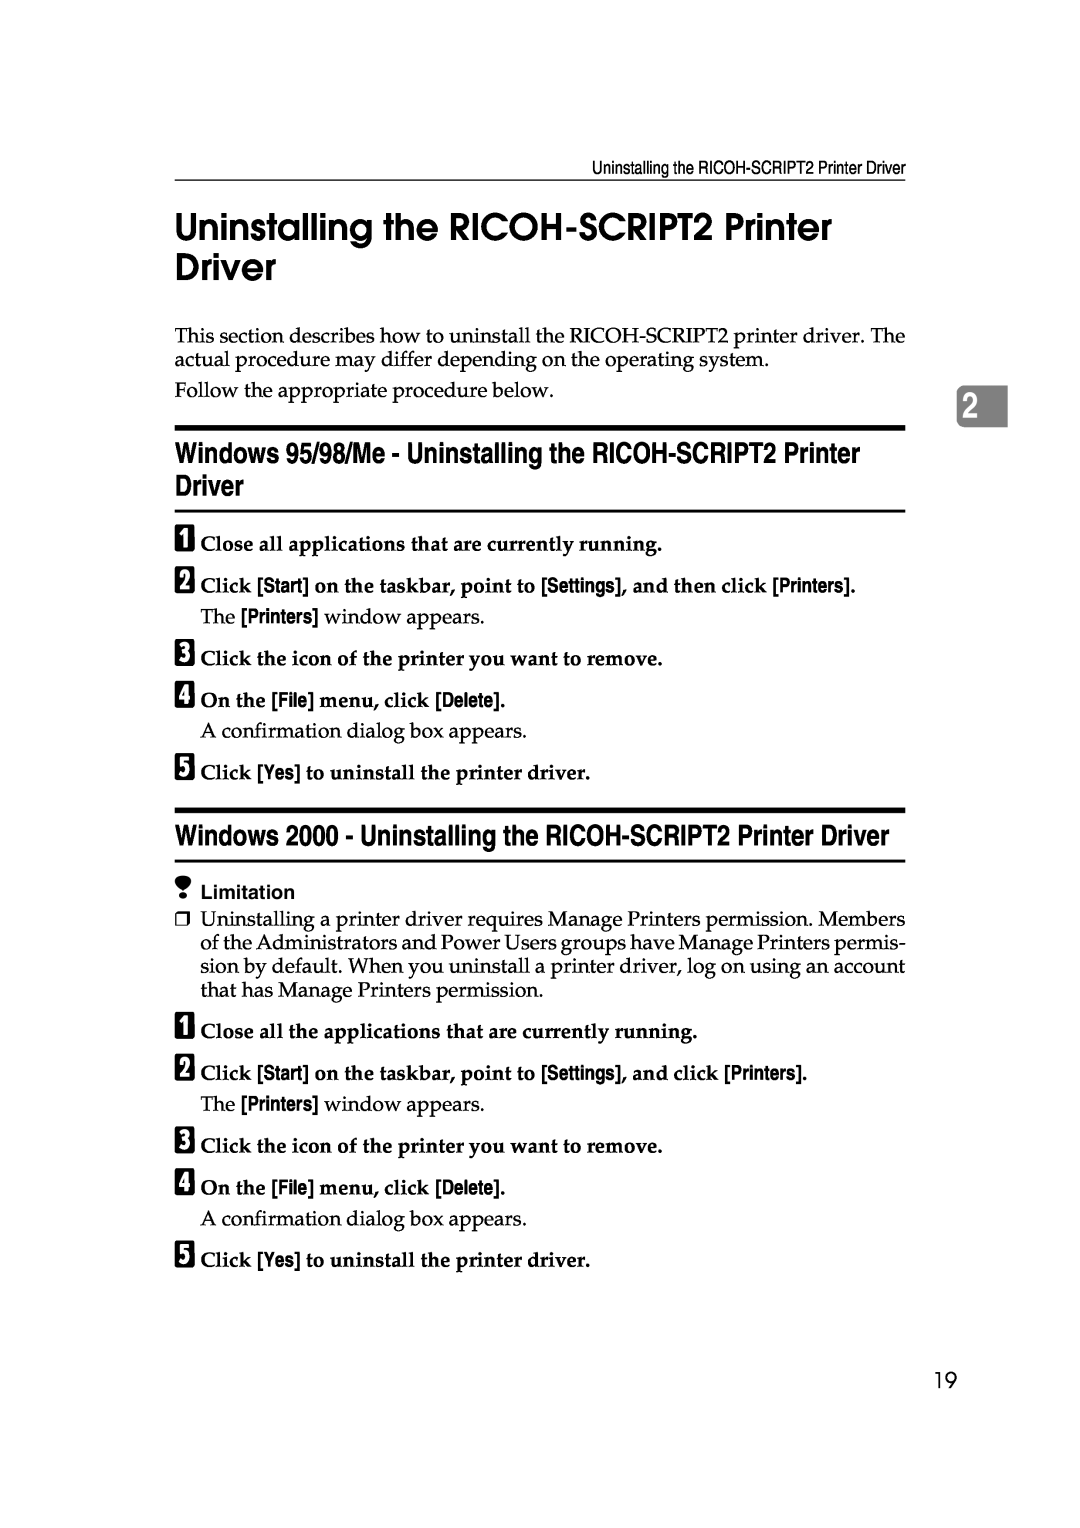 Lanier AP206 Windows 2000 - Uninstalling the RICOH-SCRIPT2 Printer Driver, A B C D, D On the File menu, click Delete 